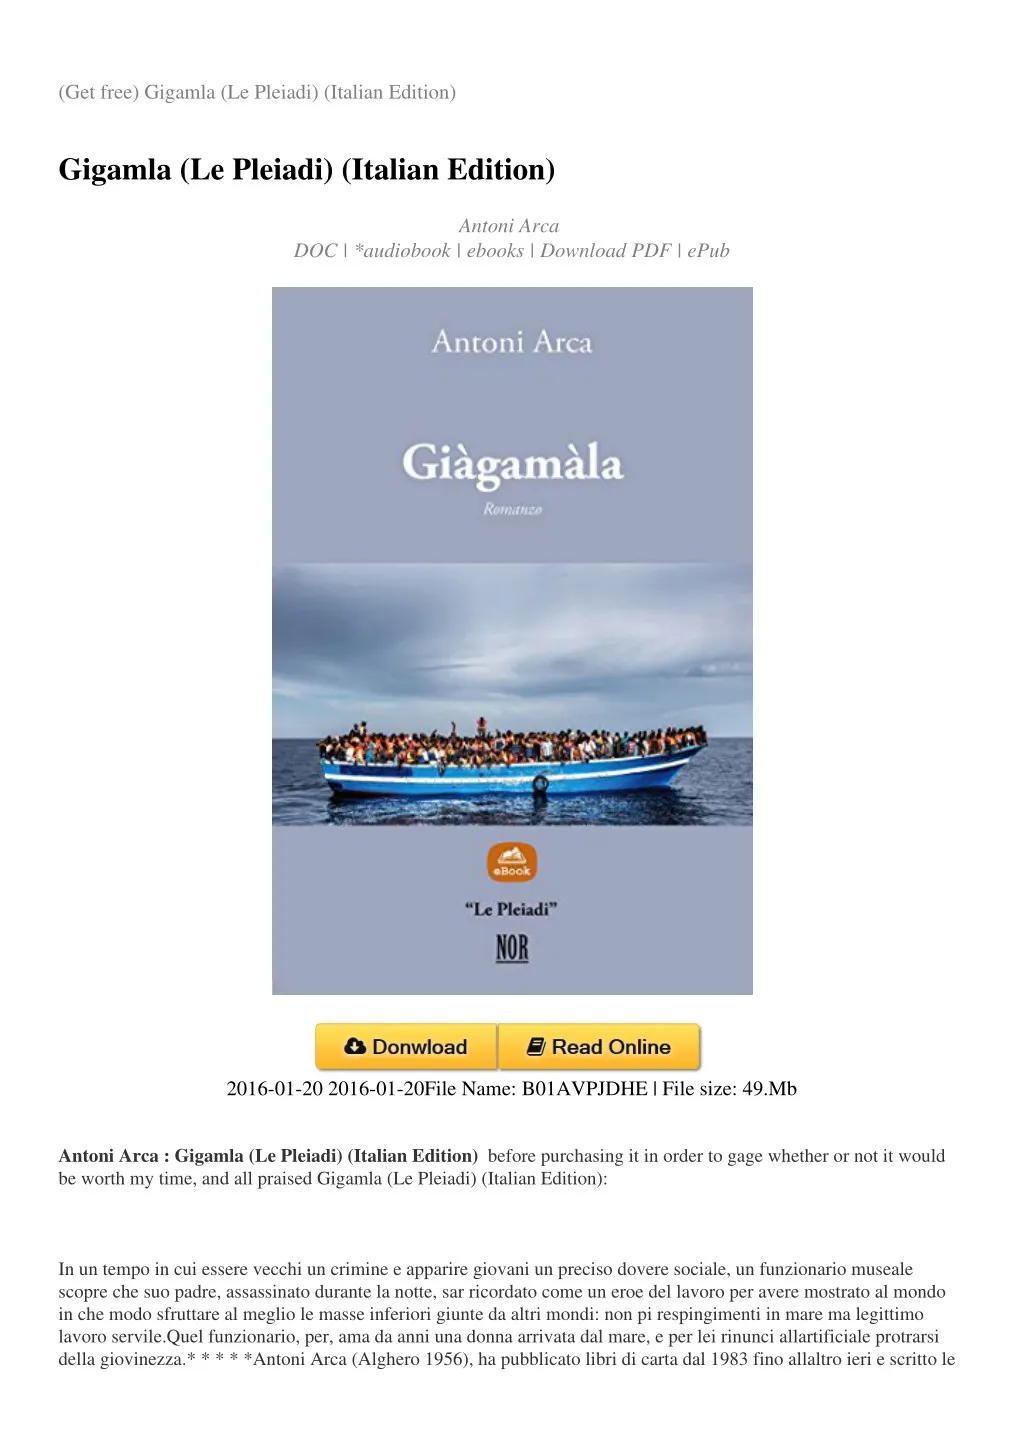 get free gigamla le pleiadi italian edition